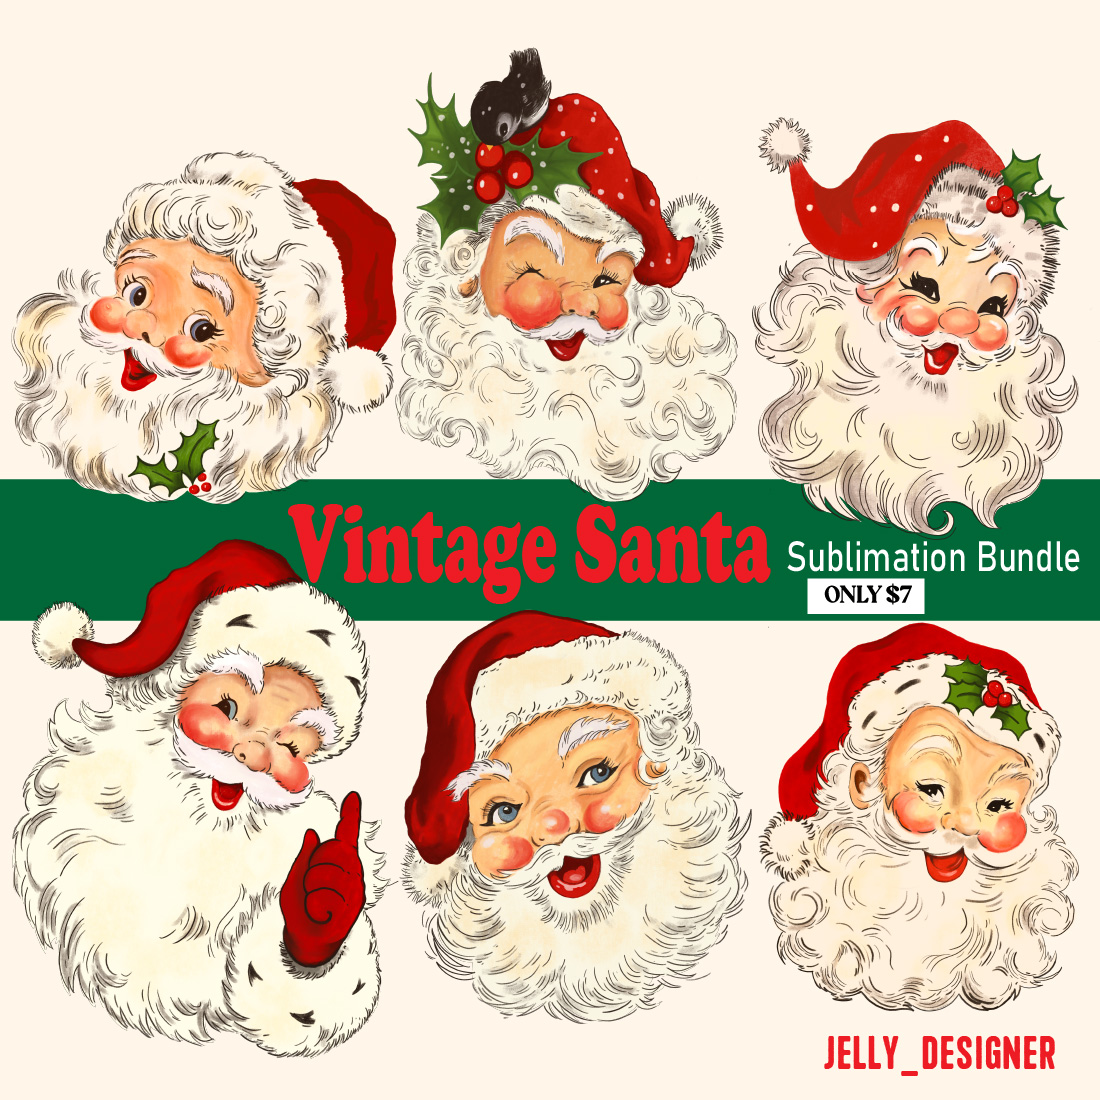 Vintage Santa Sublimation Bundle cover image.